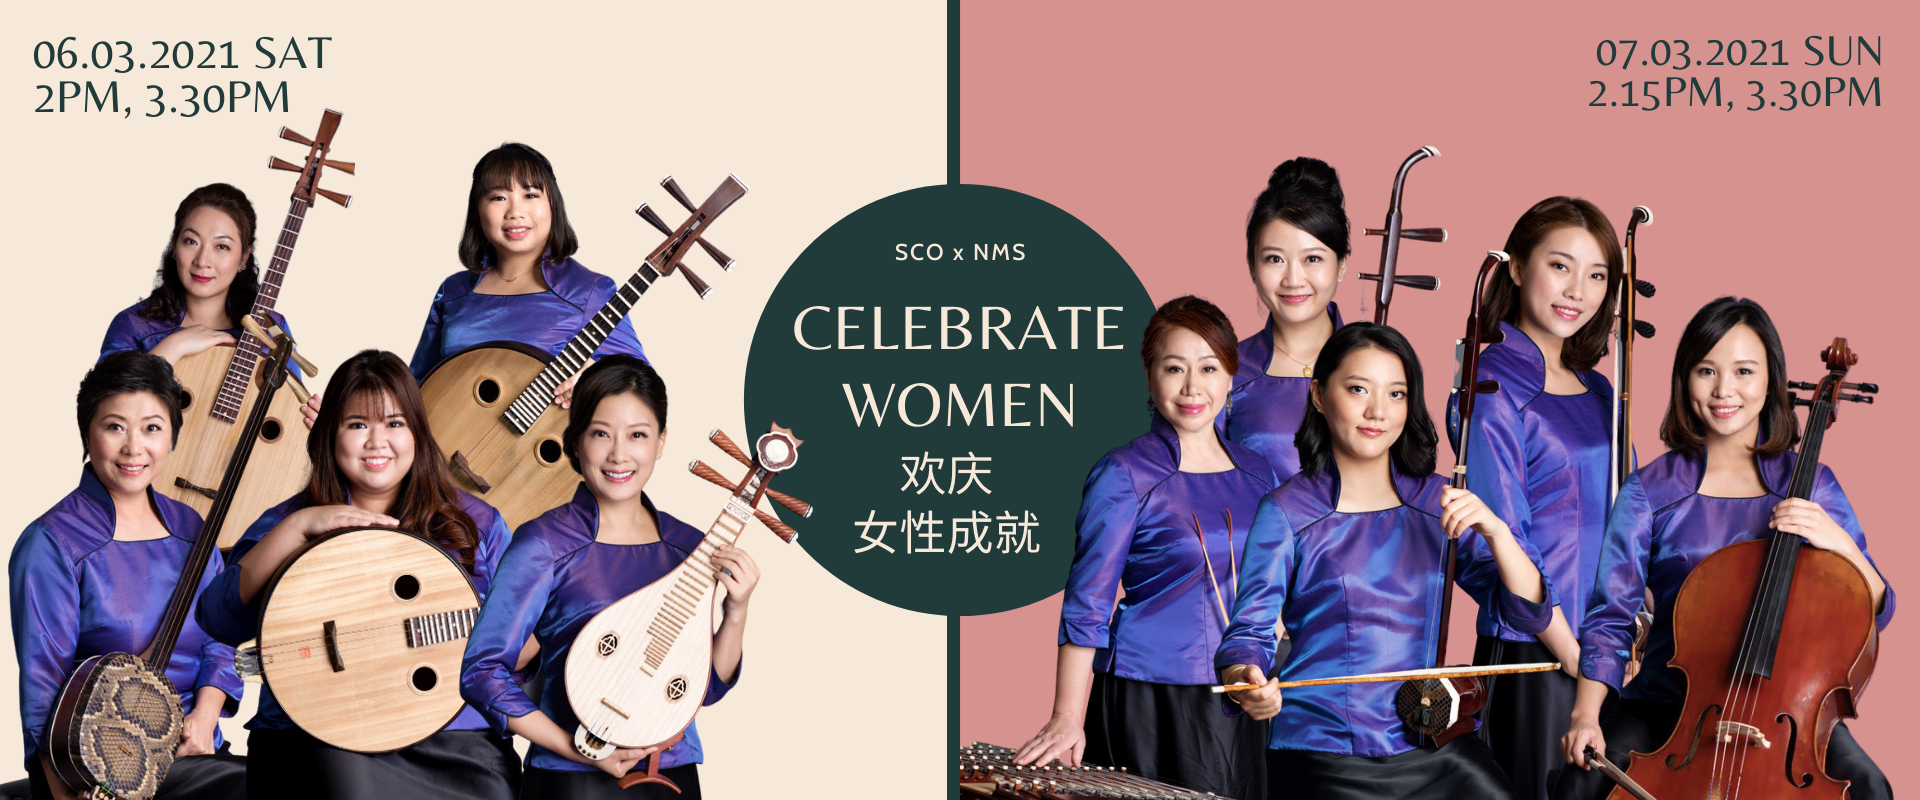 NMS-x-SCO---Celebrating-Women SCO x NMS: Celebrating Women